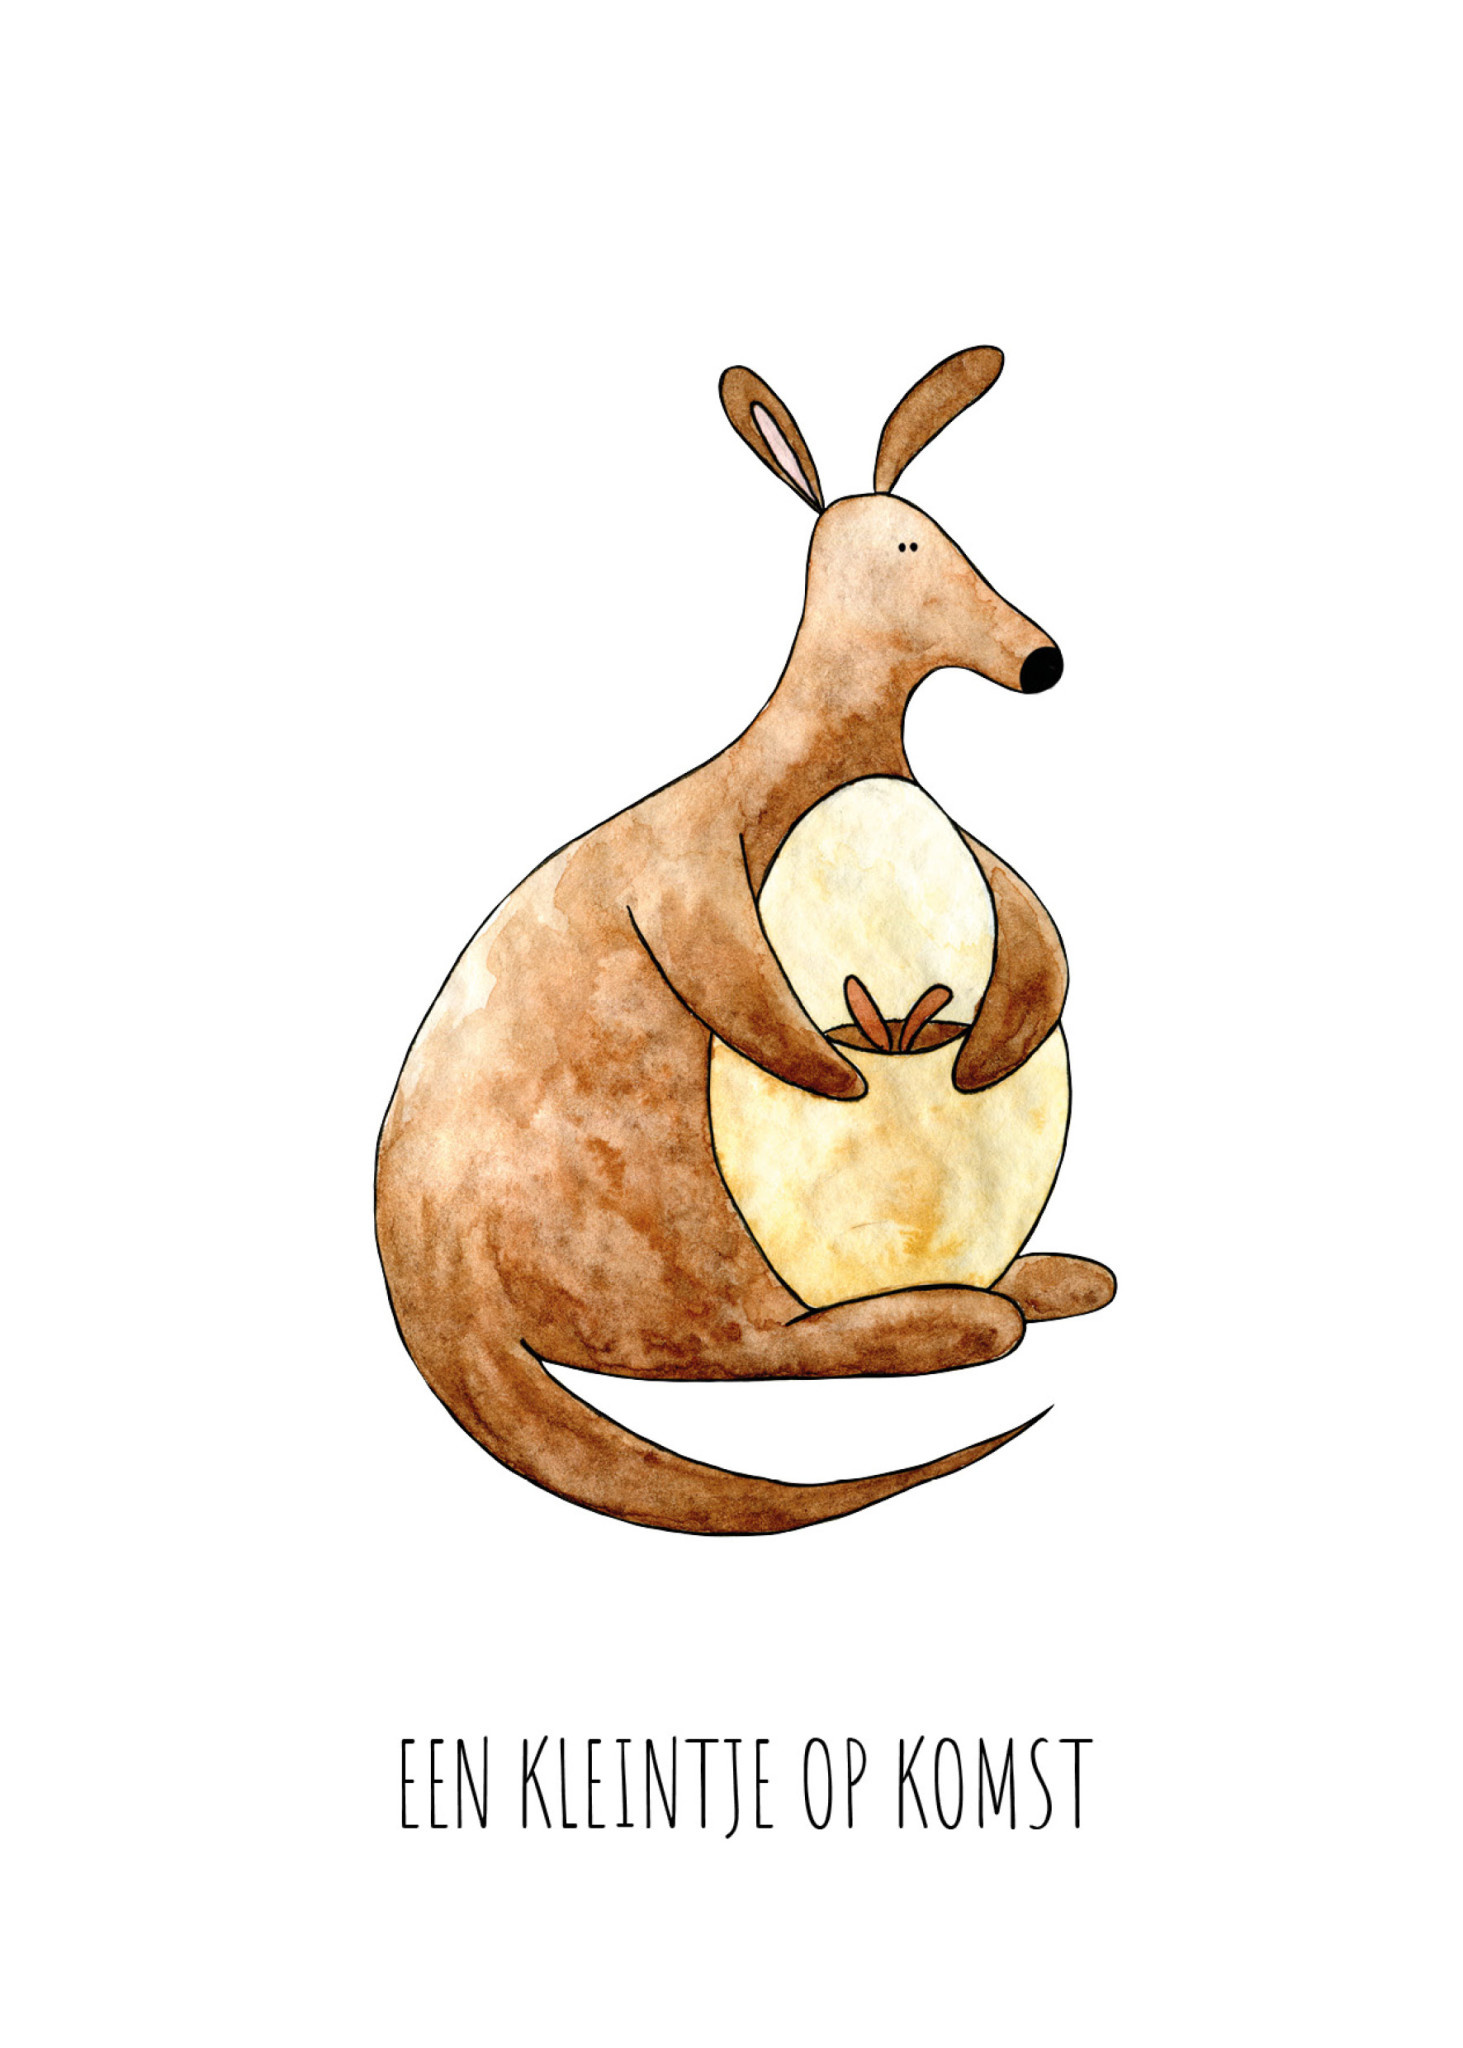 Juulz kangaroo kindje op komst-1